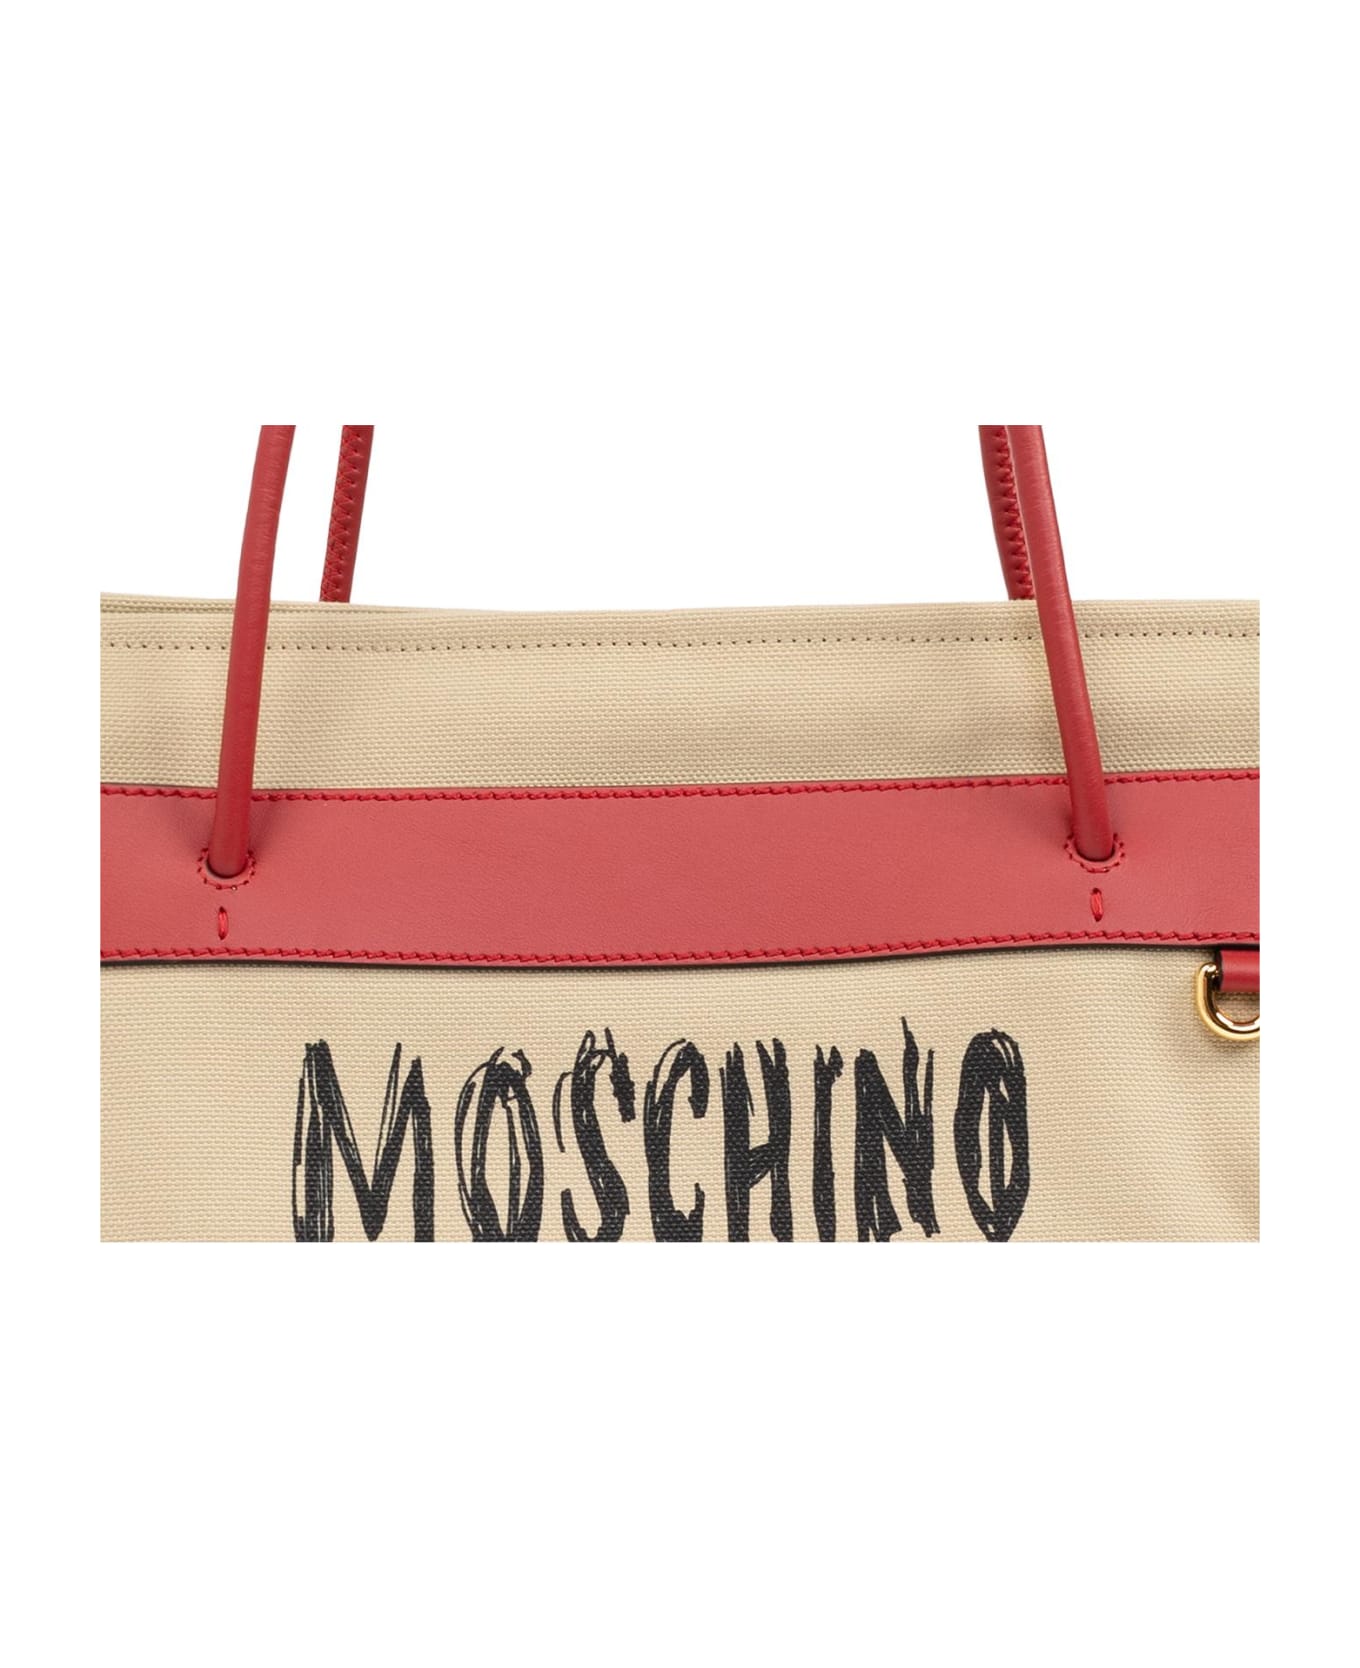 Moschino Shopper Bag - Beige